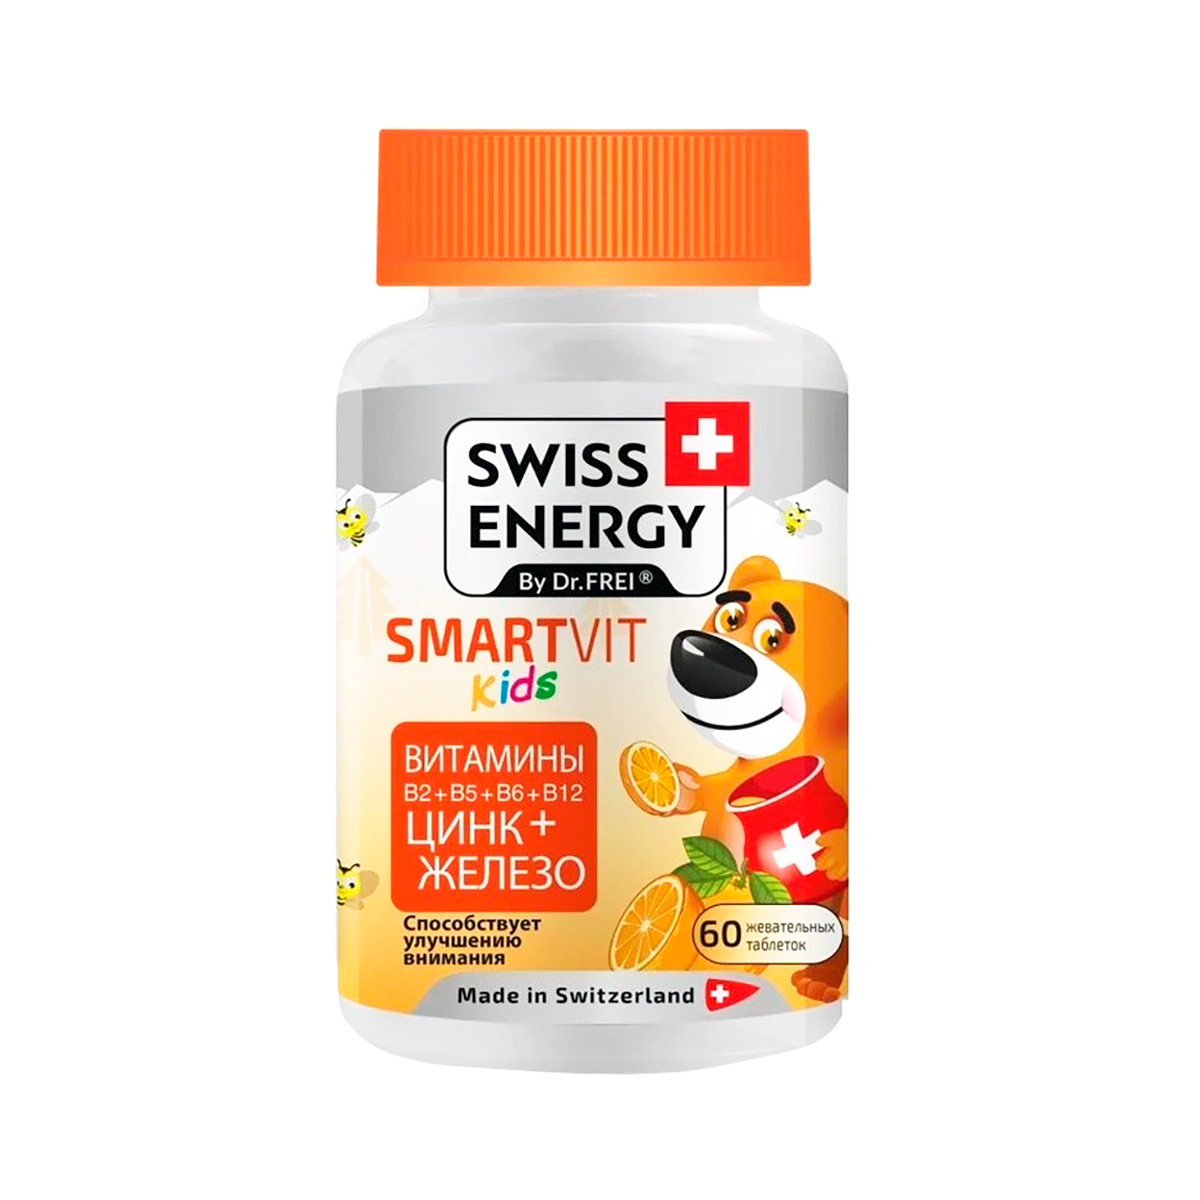 Smartvit Kids Vitamins B2, B5, B6, B12, Zinc + Iron таблетки жевательные для детей 60 шт Swiss Energy